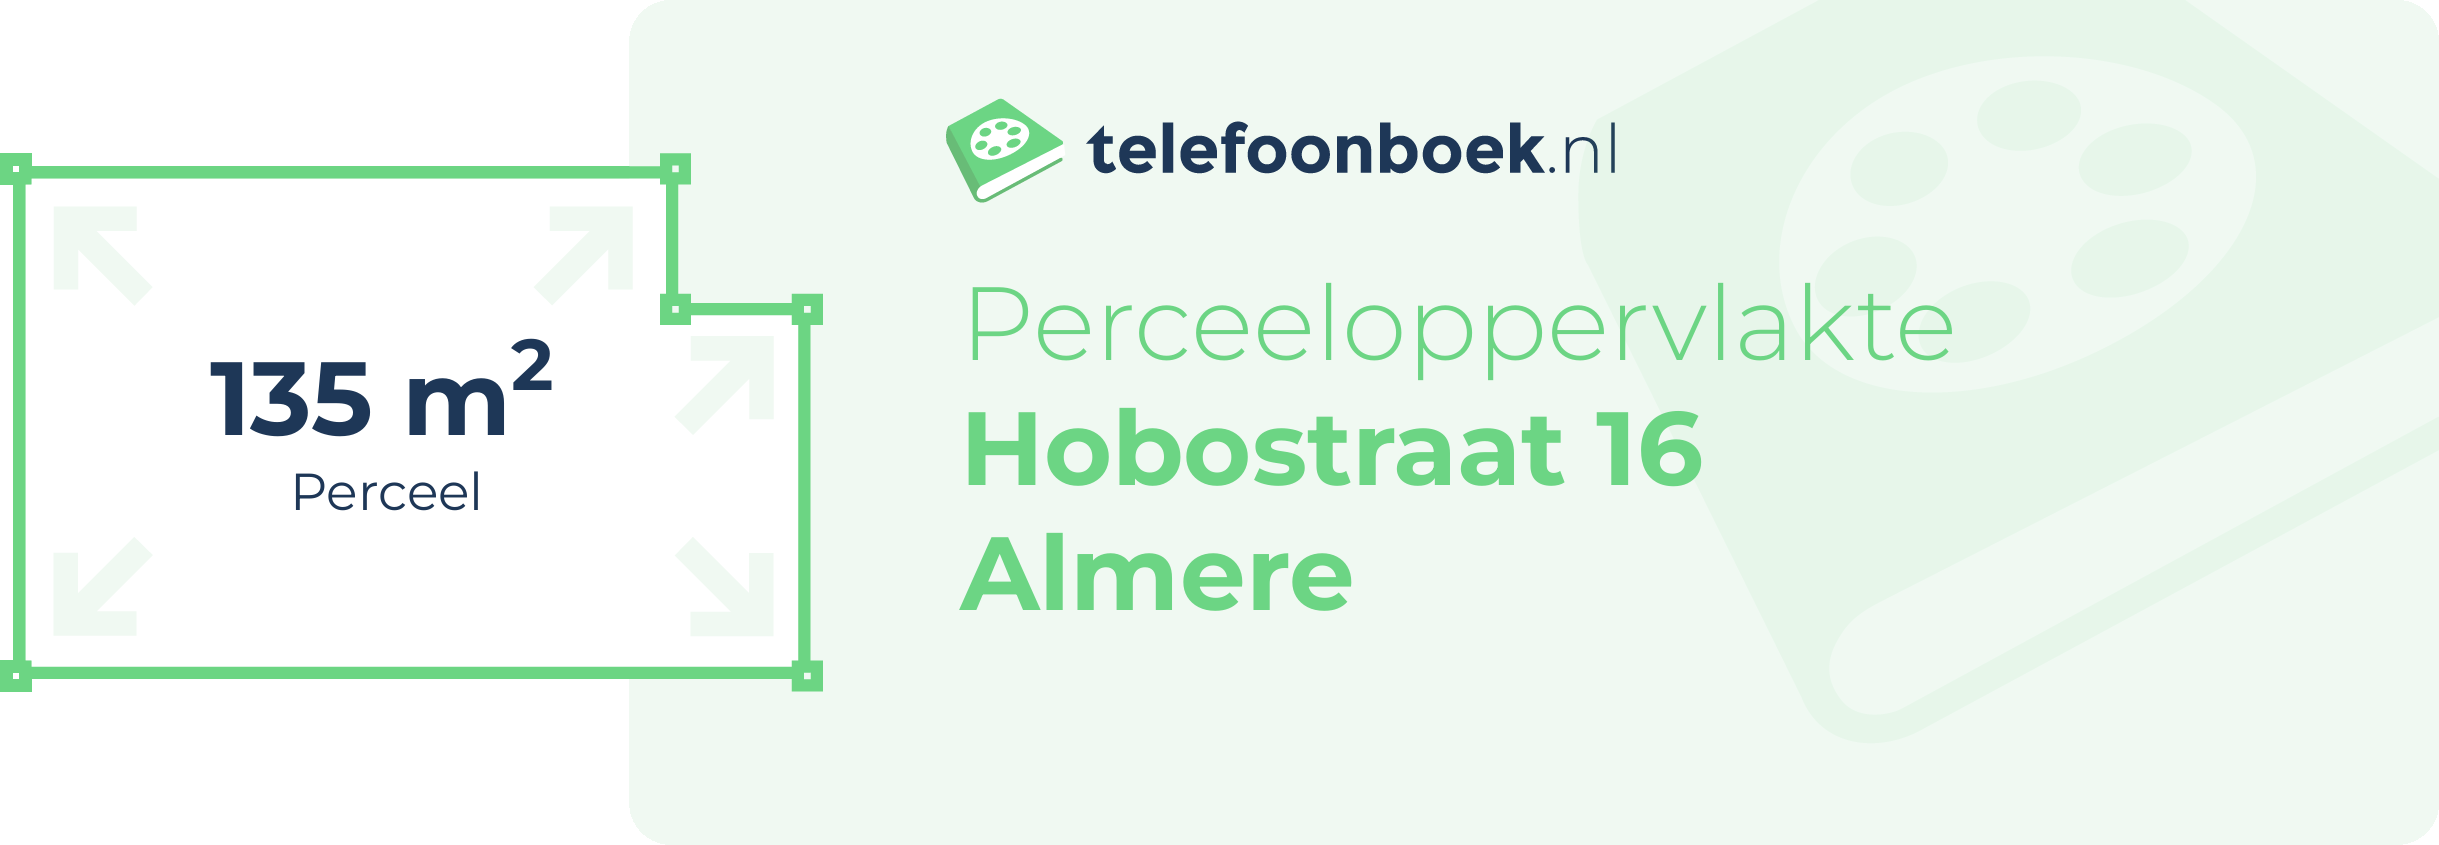 Perceeloppervlakte Hobostraat 16 Almere